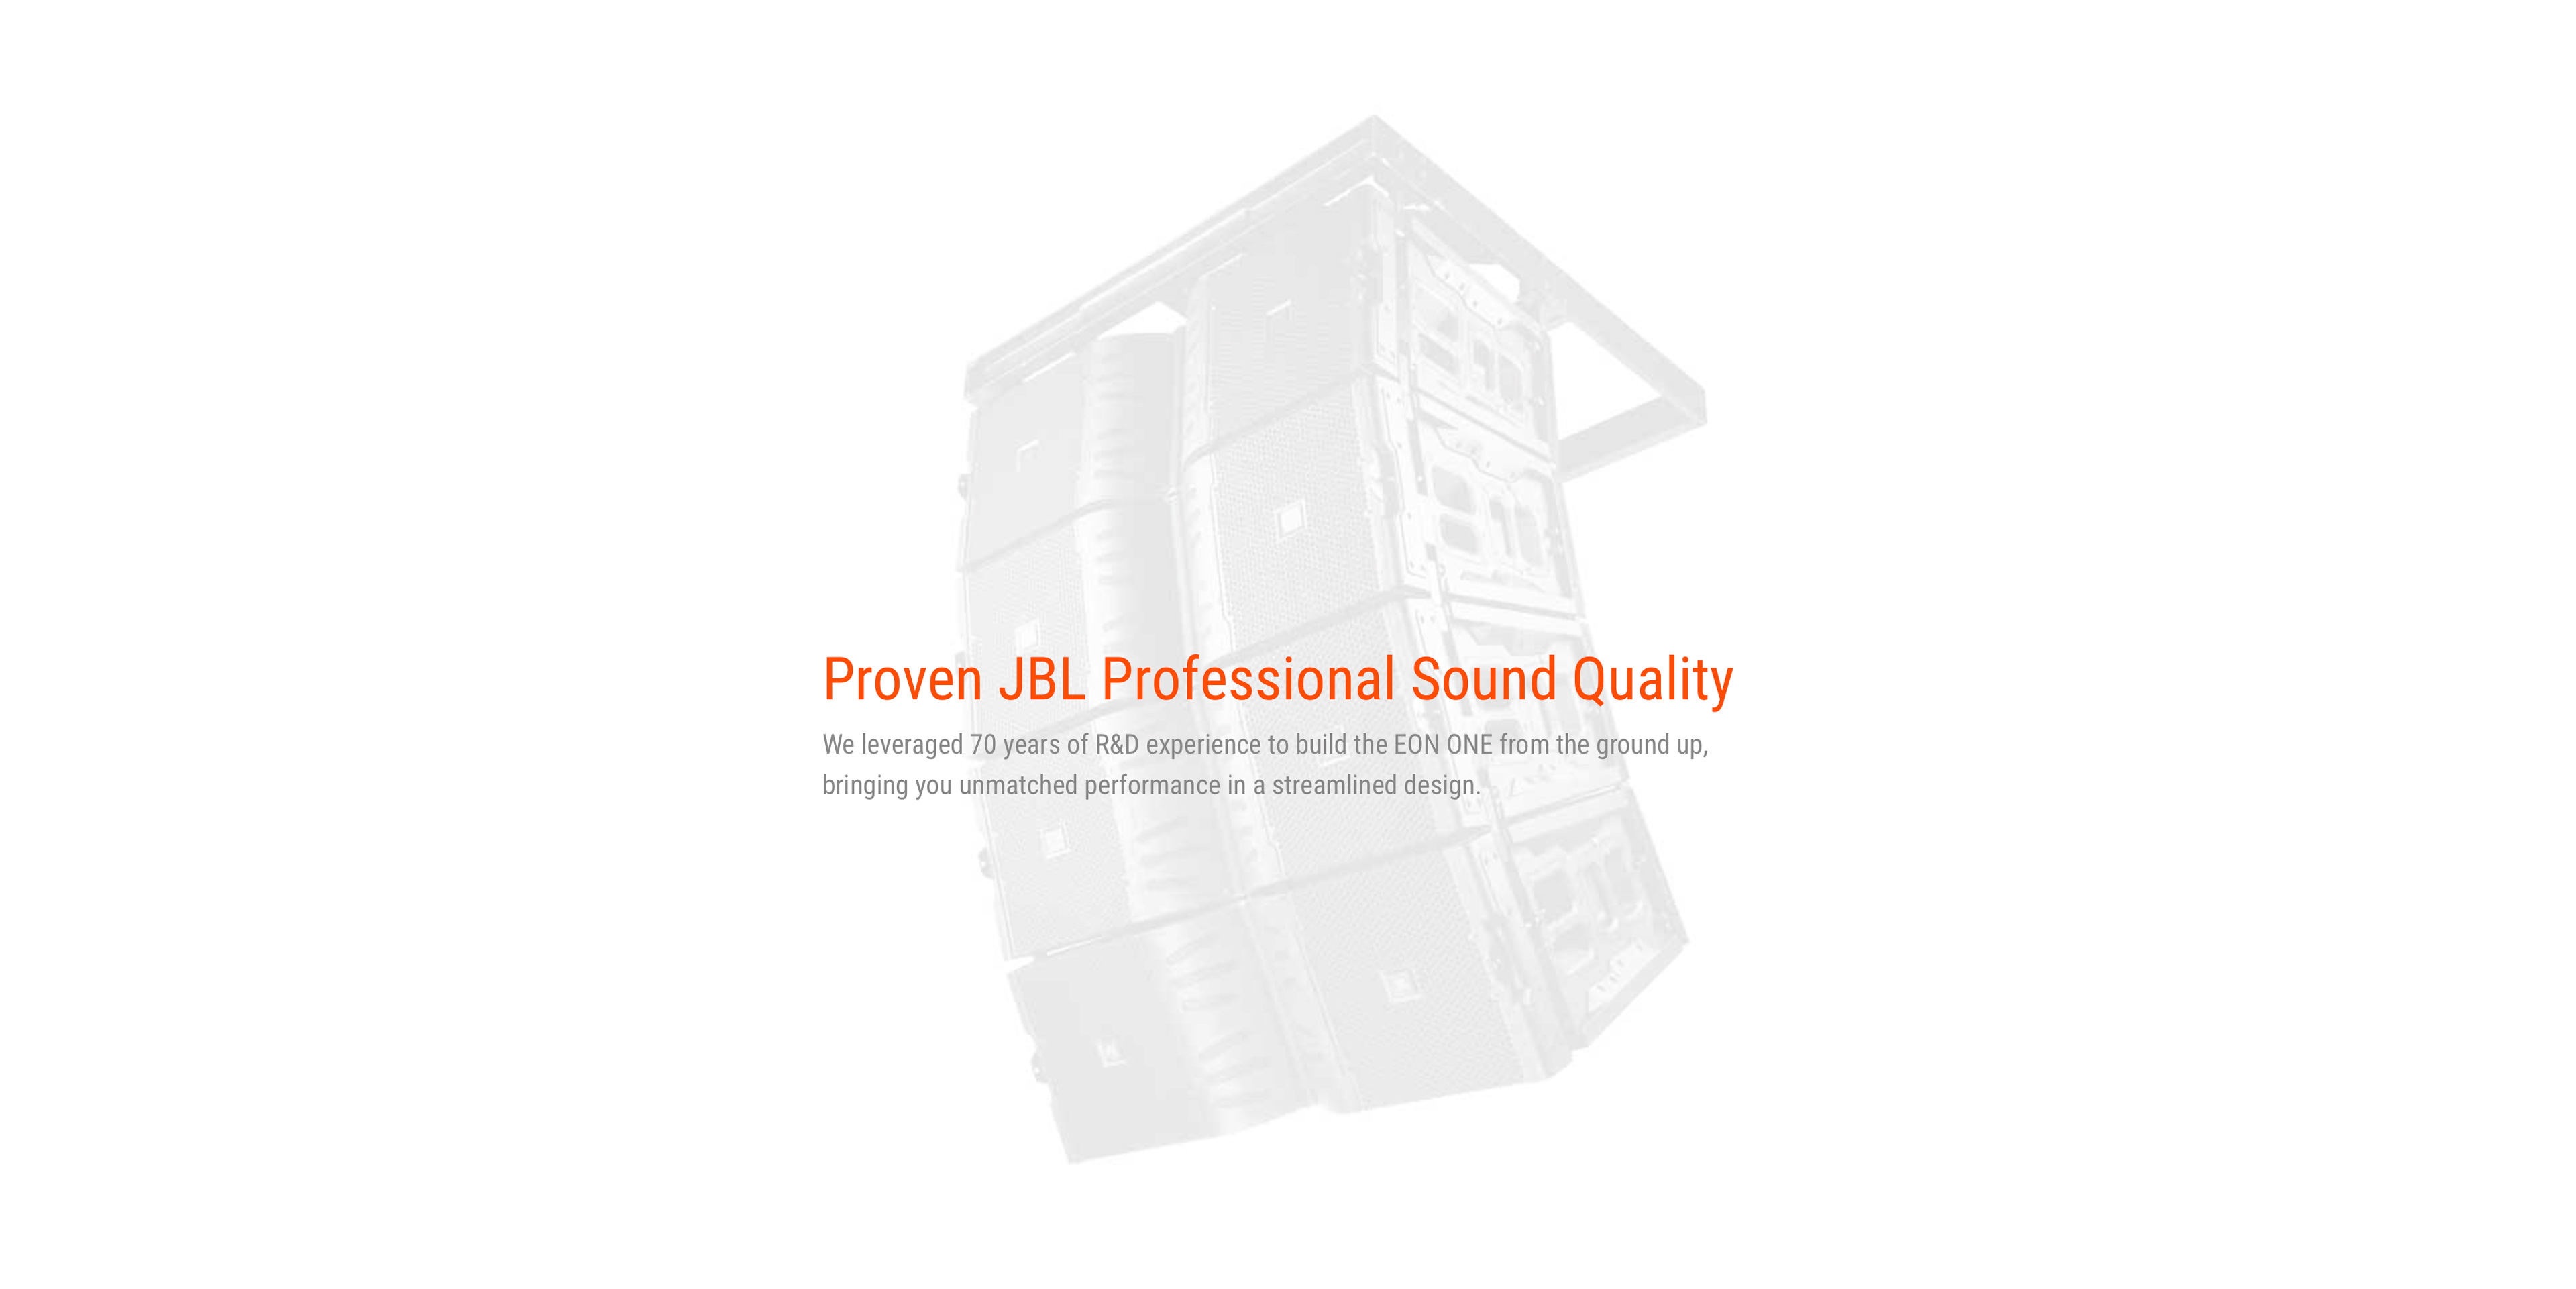 Proven JBL Professional Sound Quality